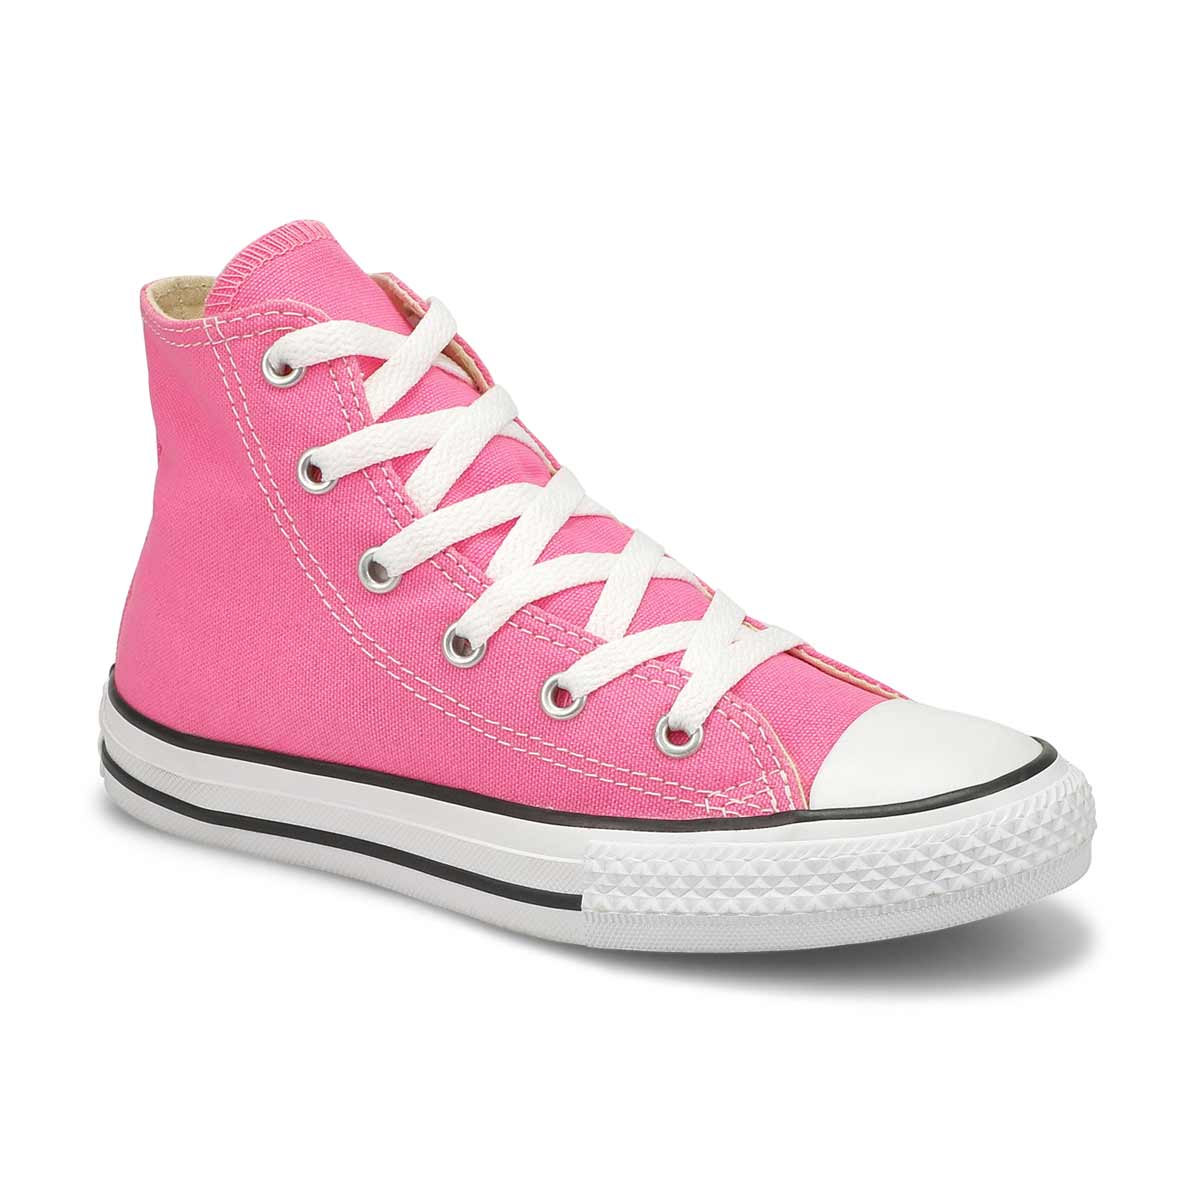 pink converse size 3